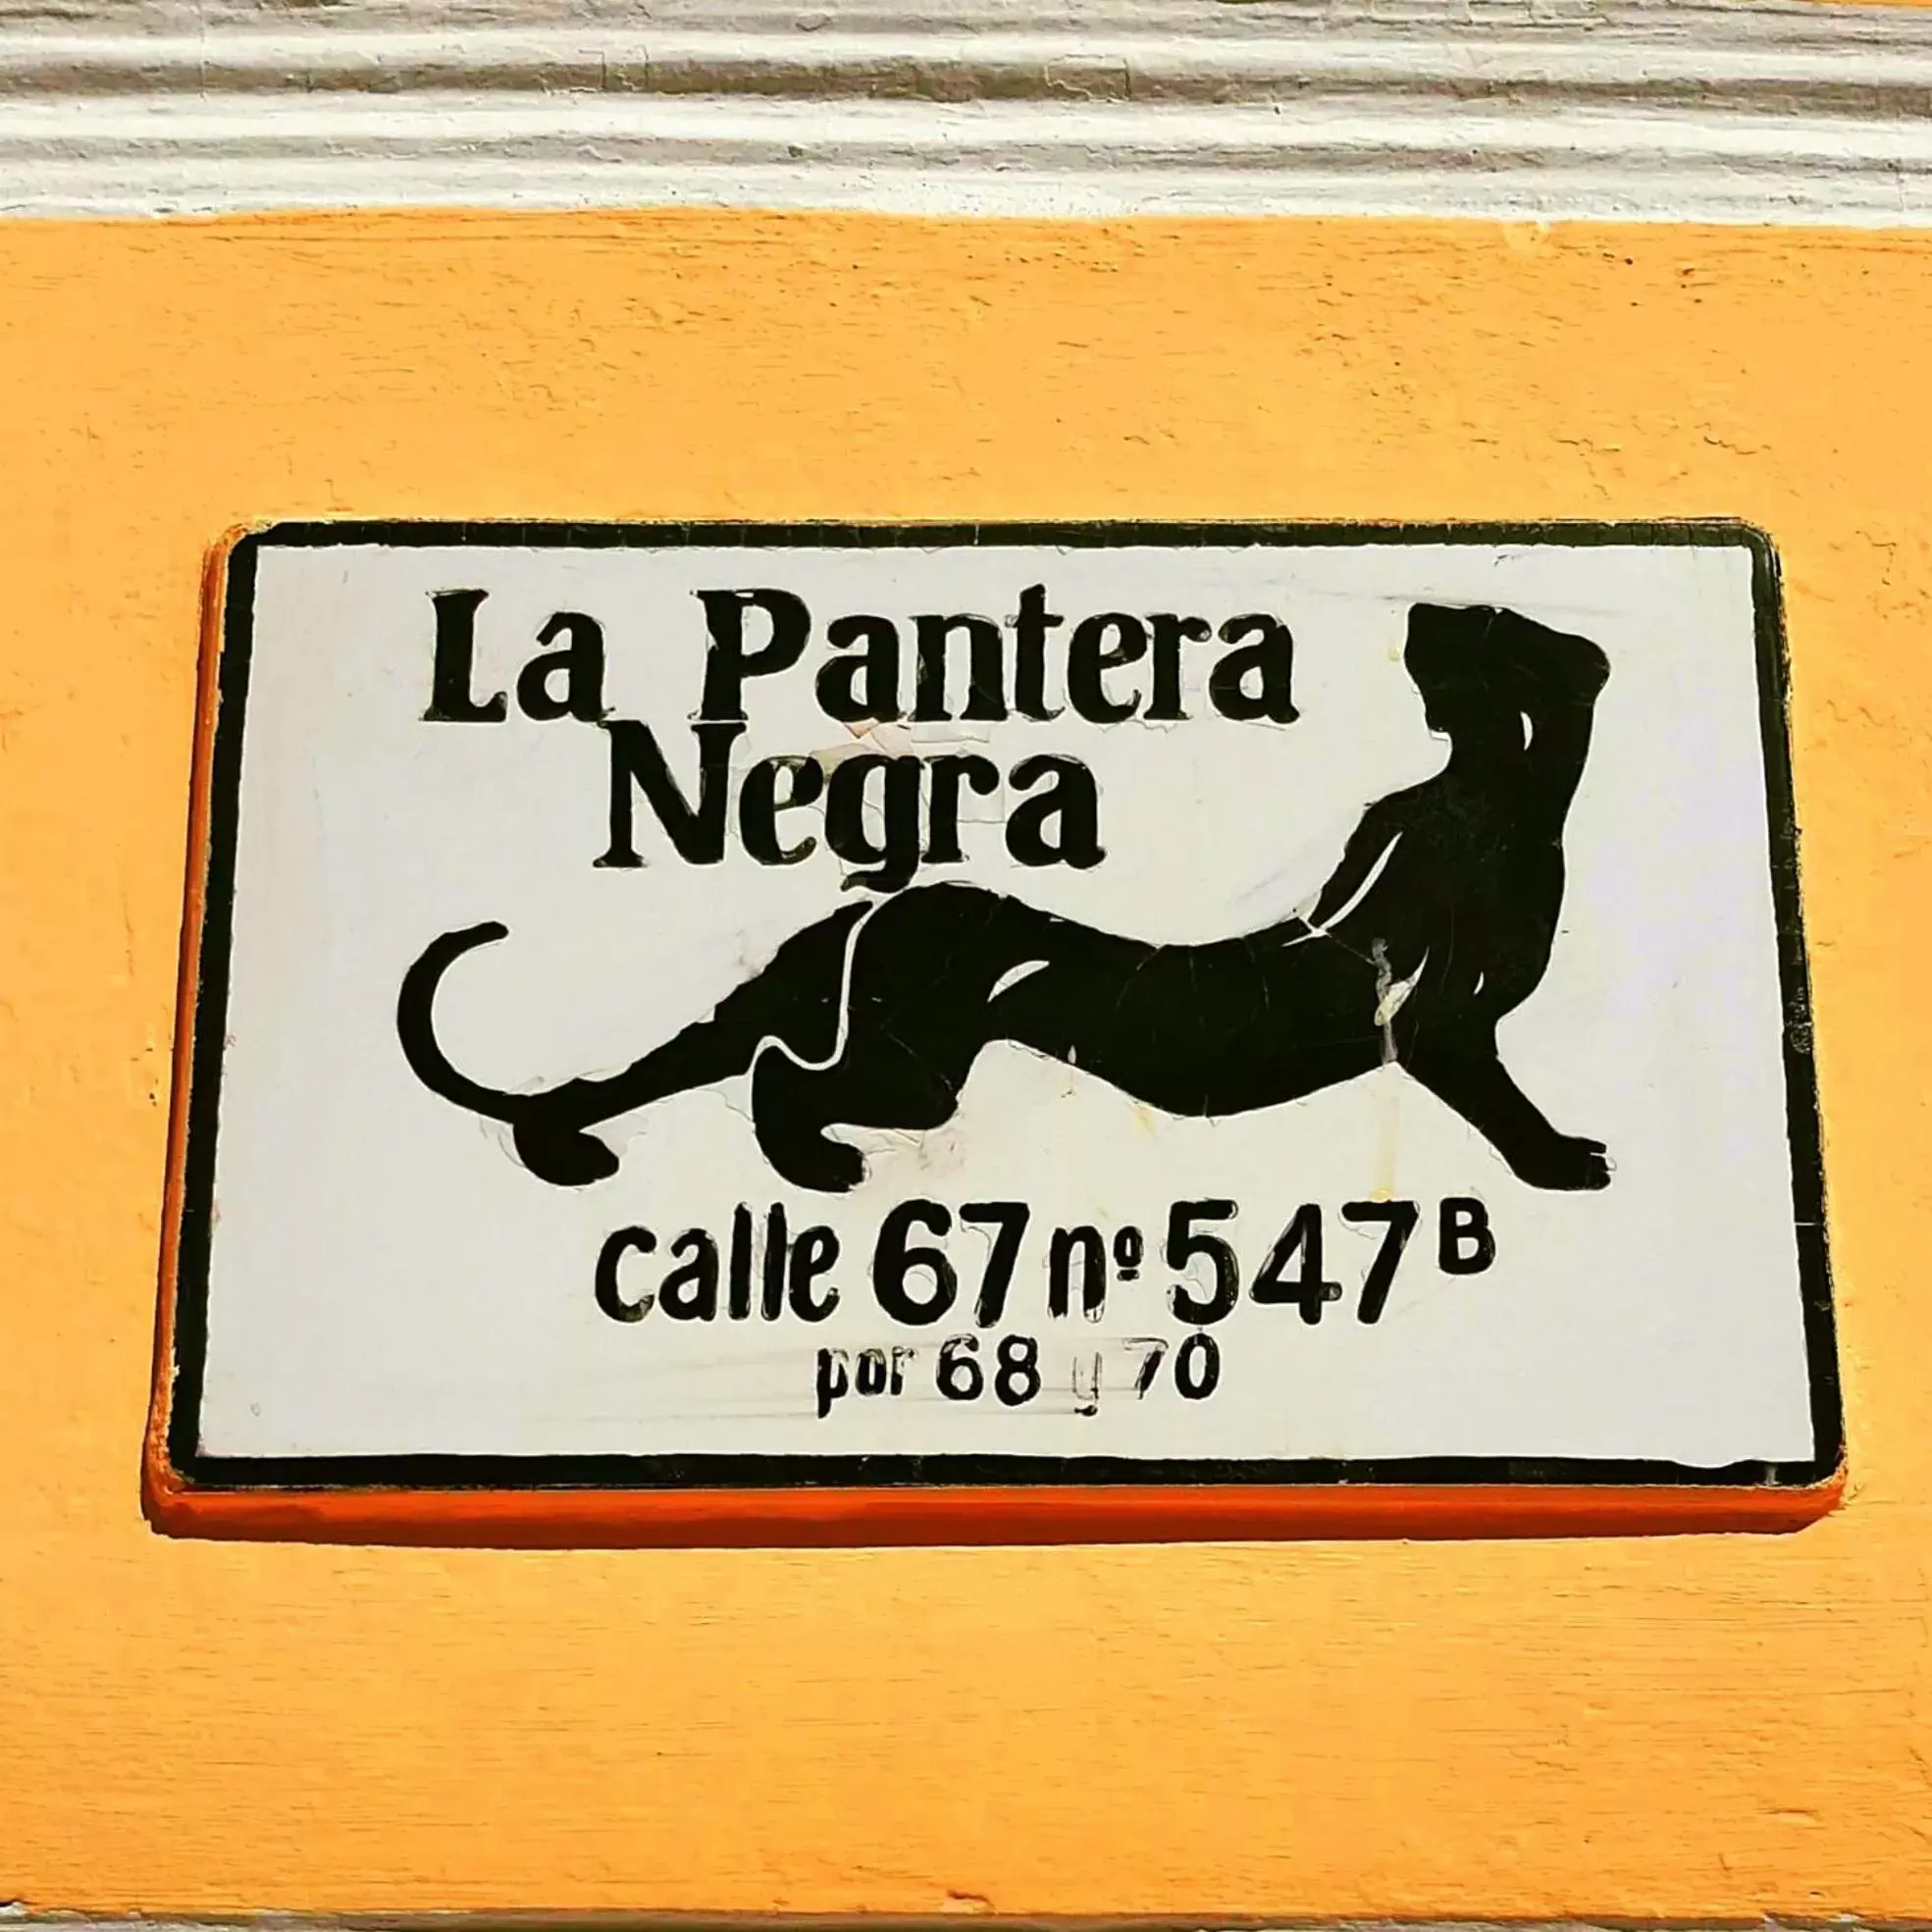 Property logo or sign in La Pantera Negra